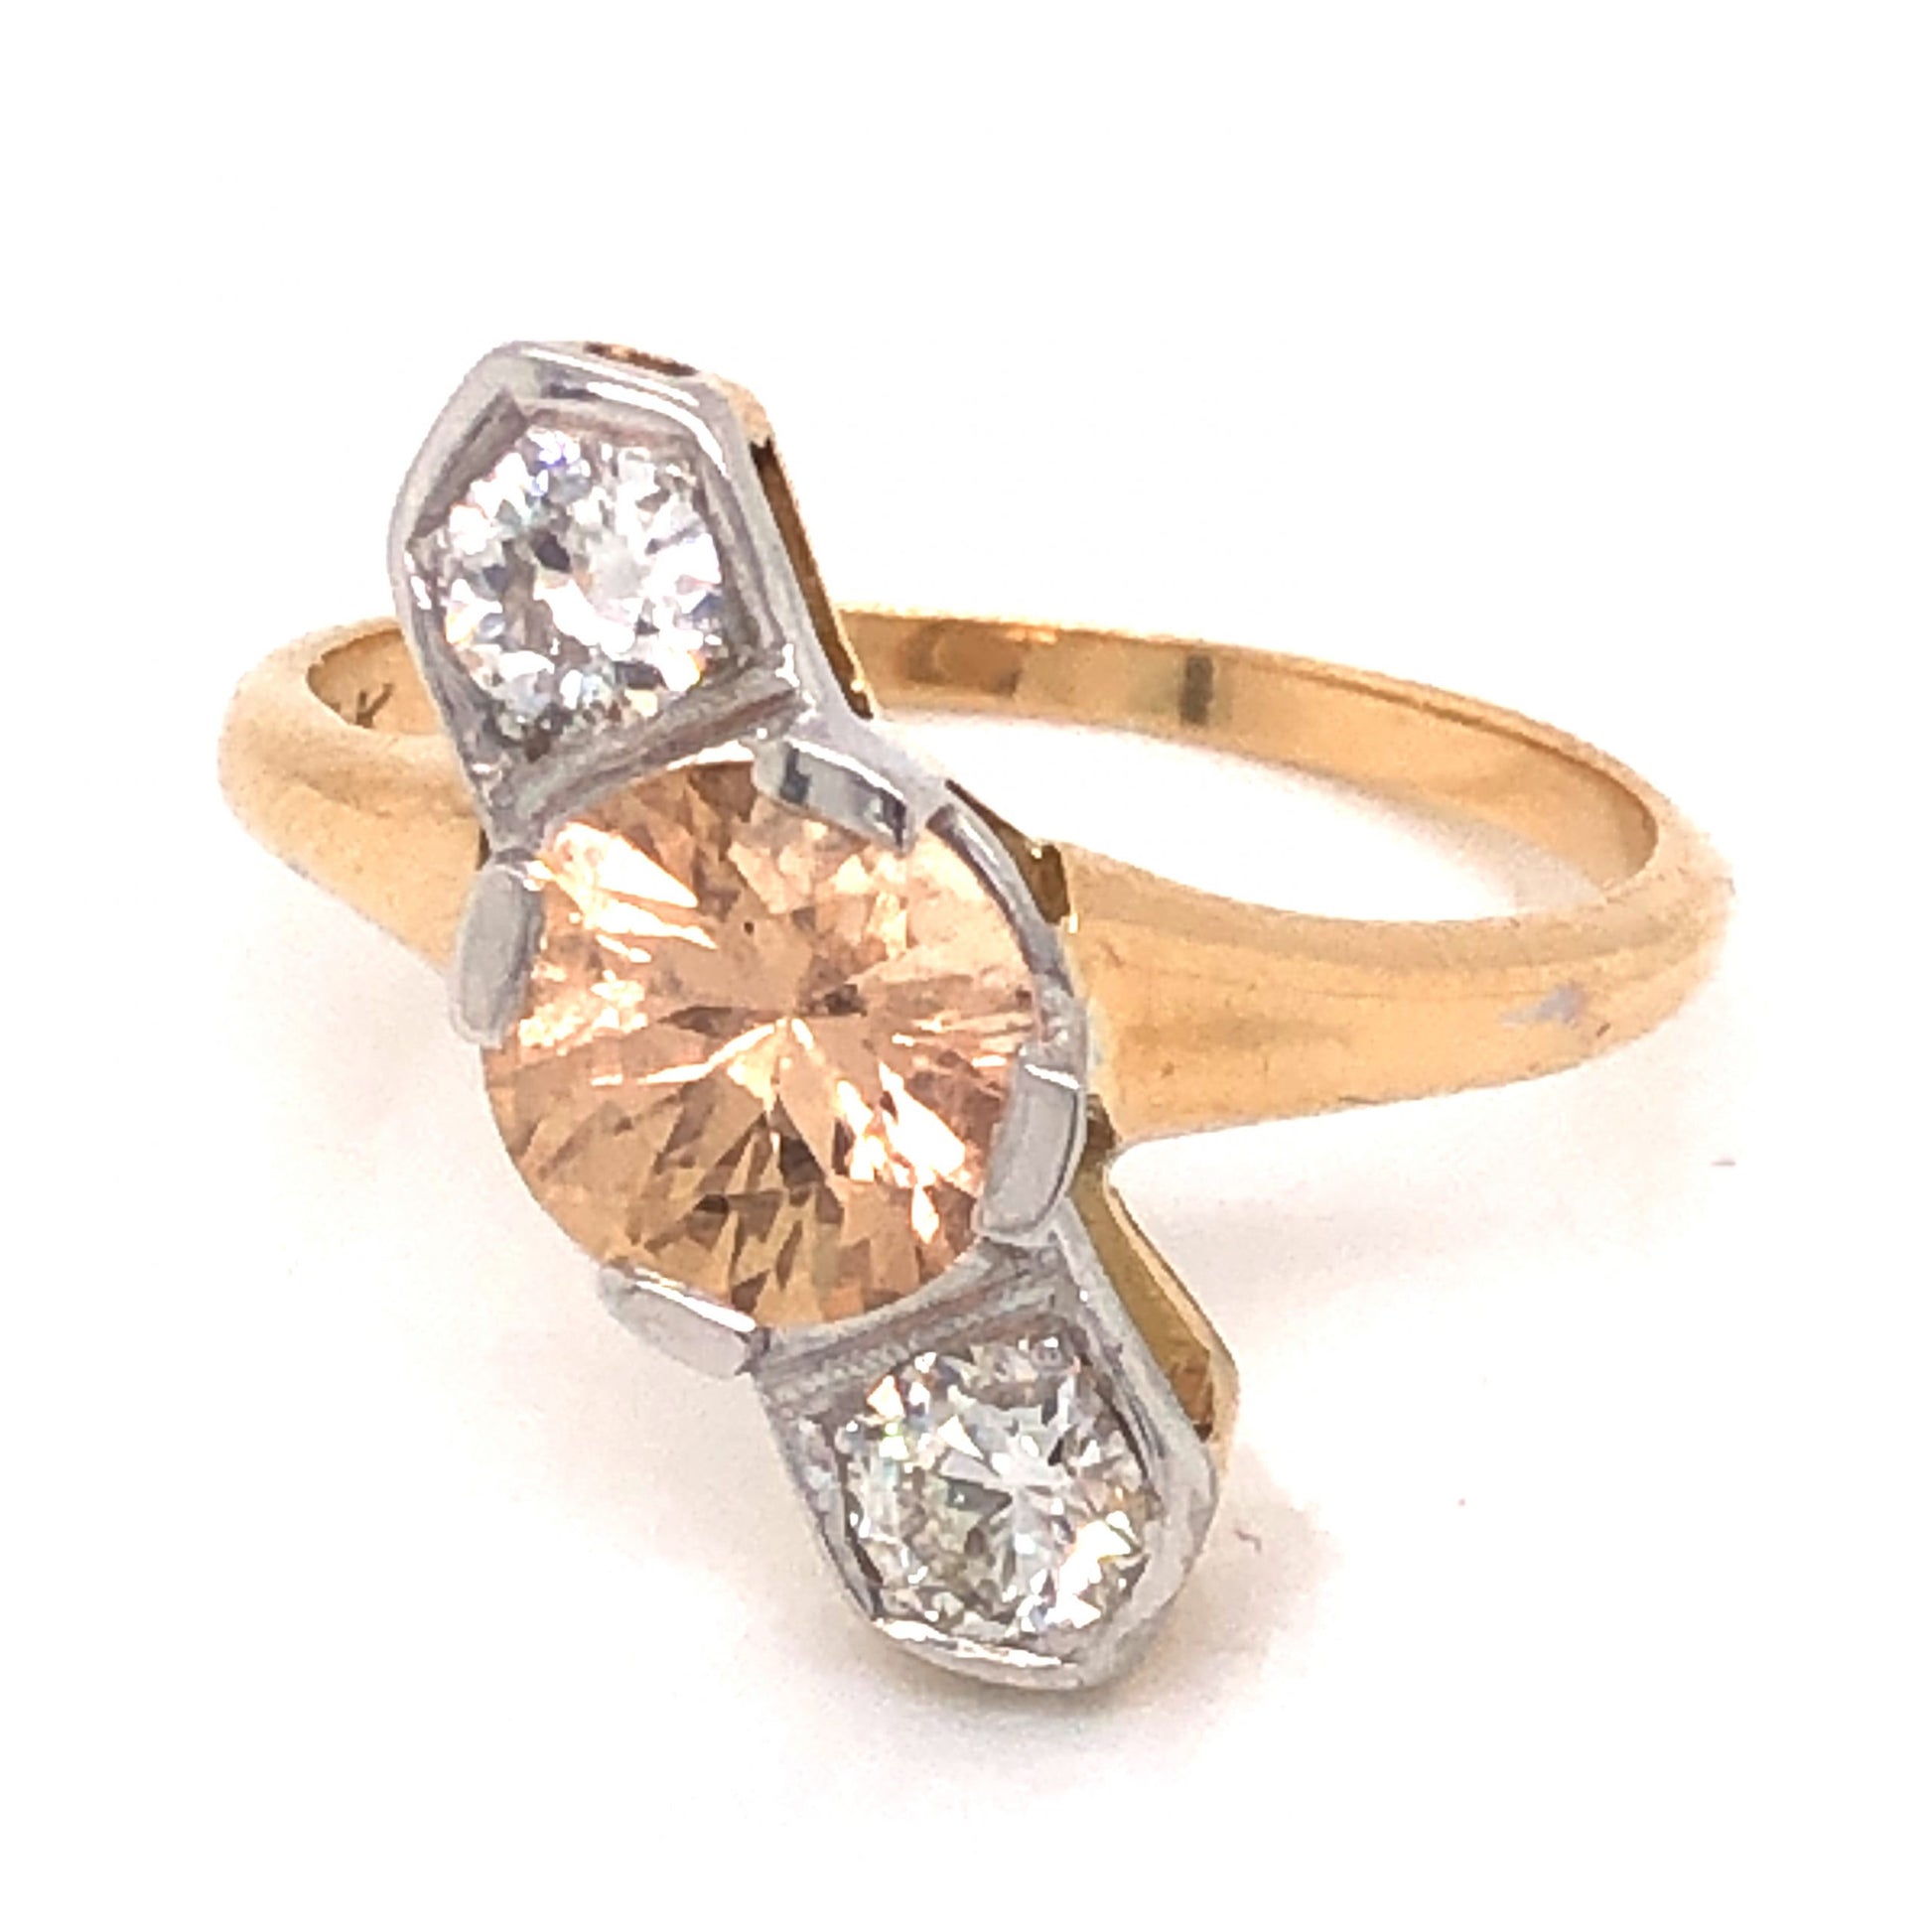 1.33 Peach Sapphire & Diamond Ring in 14k Yellow & White Gold